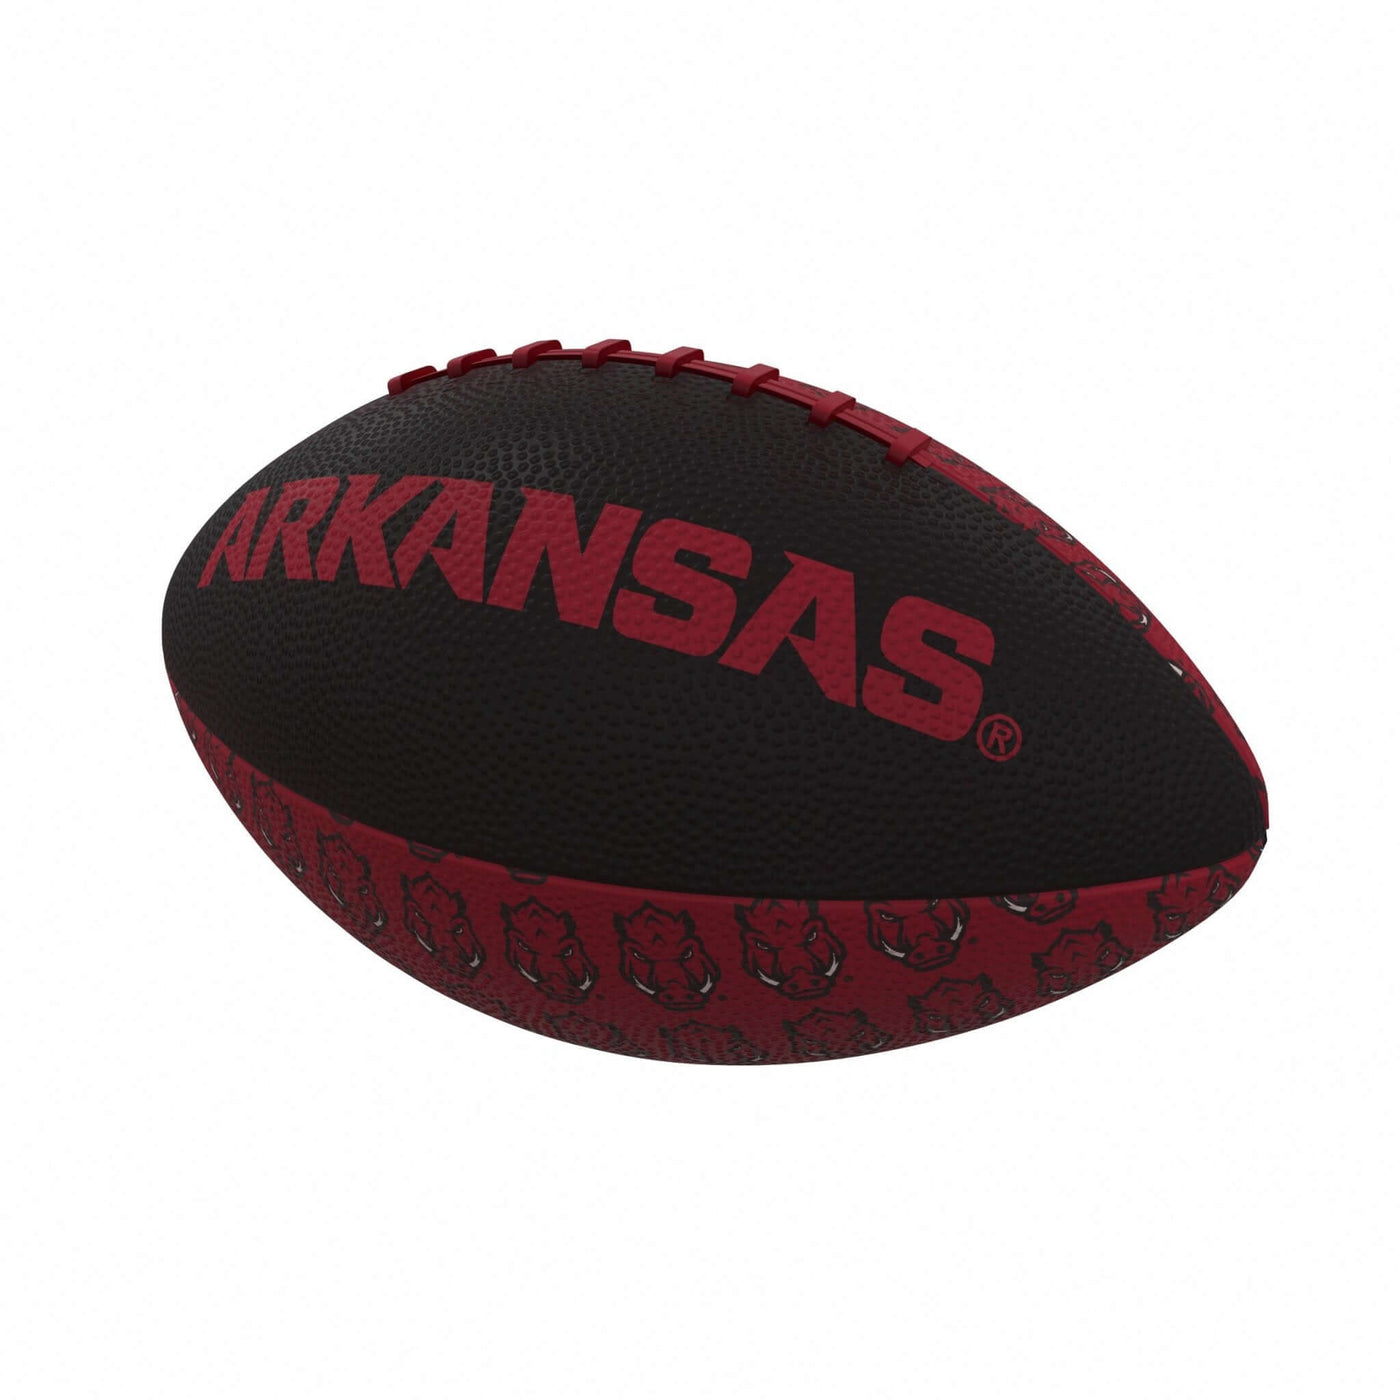 Arkansas Repeating Mini-Size Rubber Football - Logo Brands